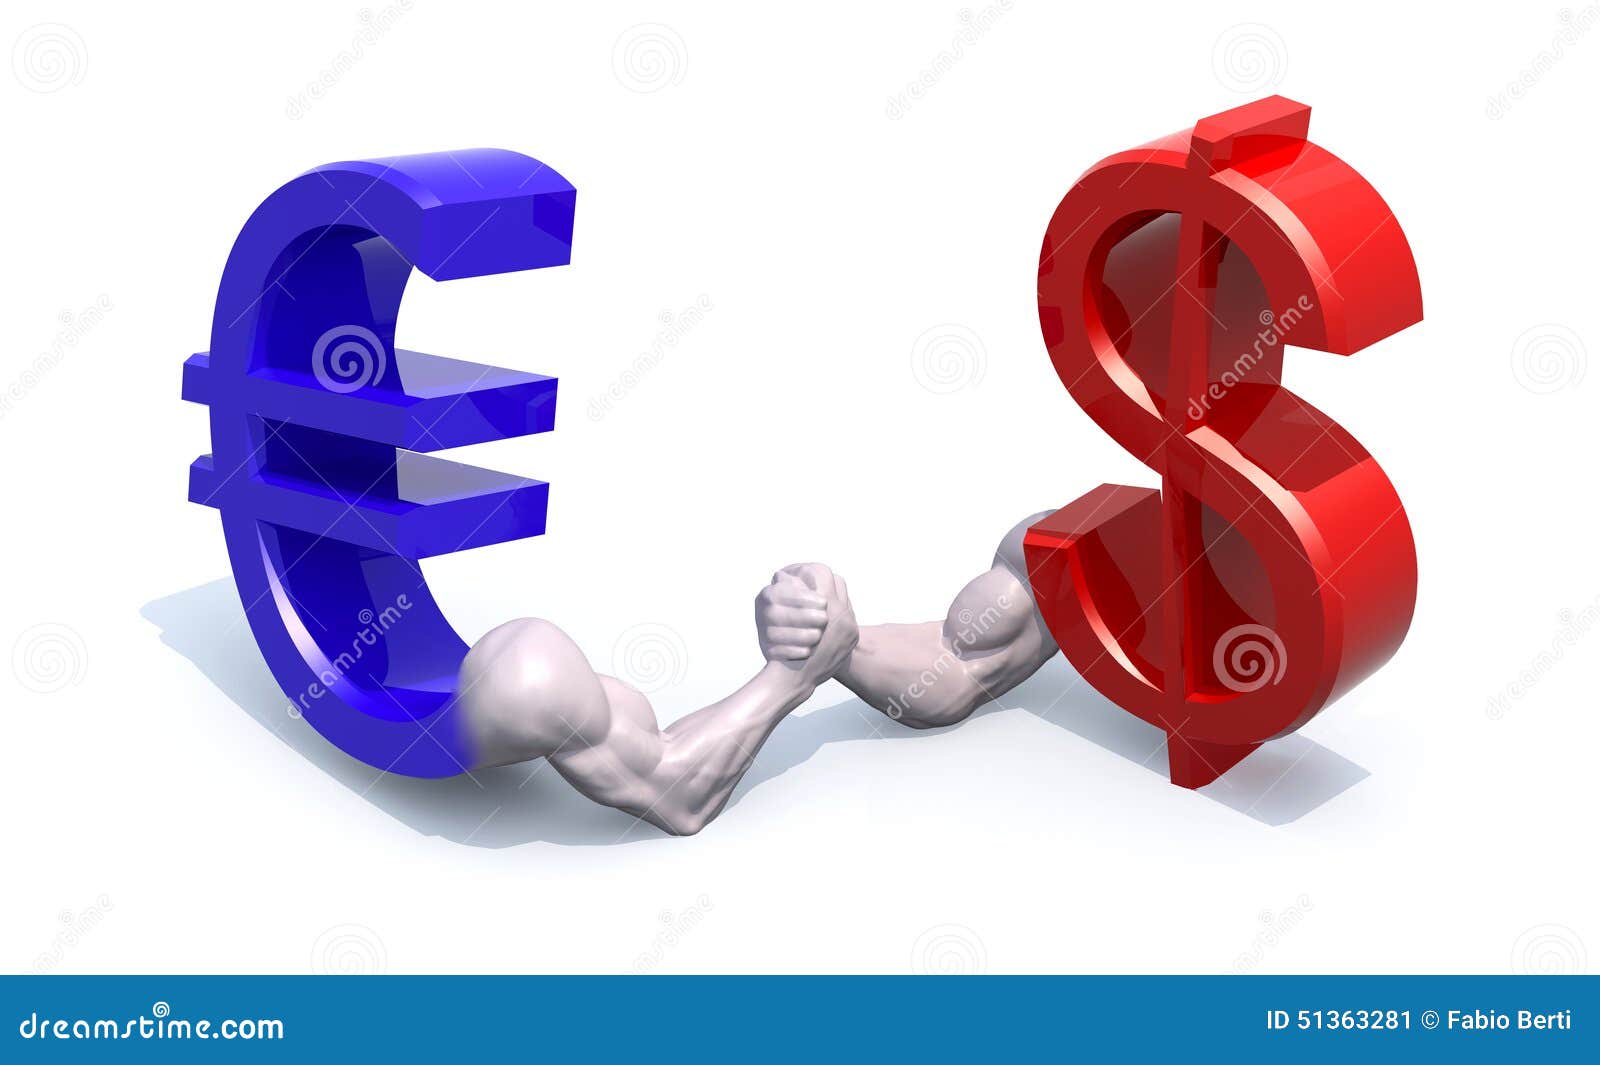 Euro and dollar symbol currency make arm wrestling, 3d illustration